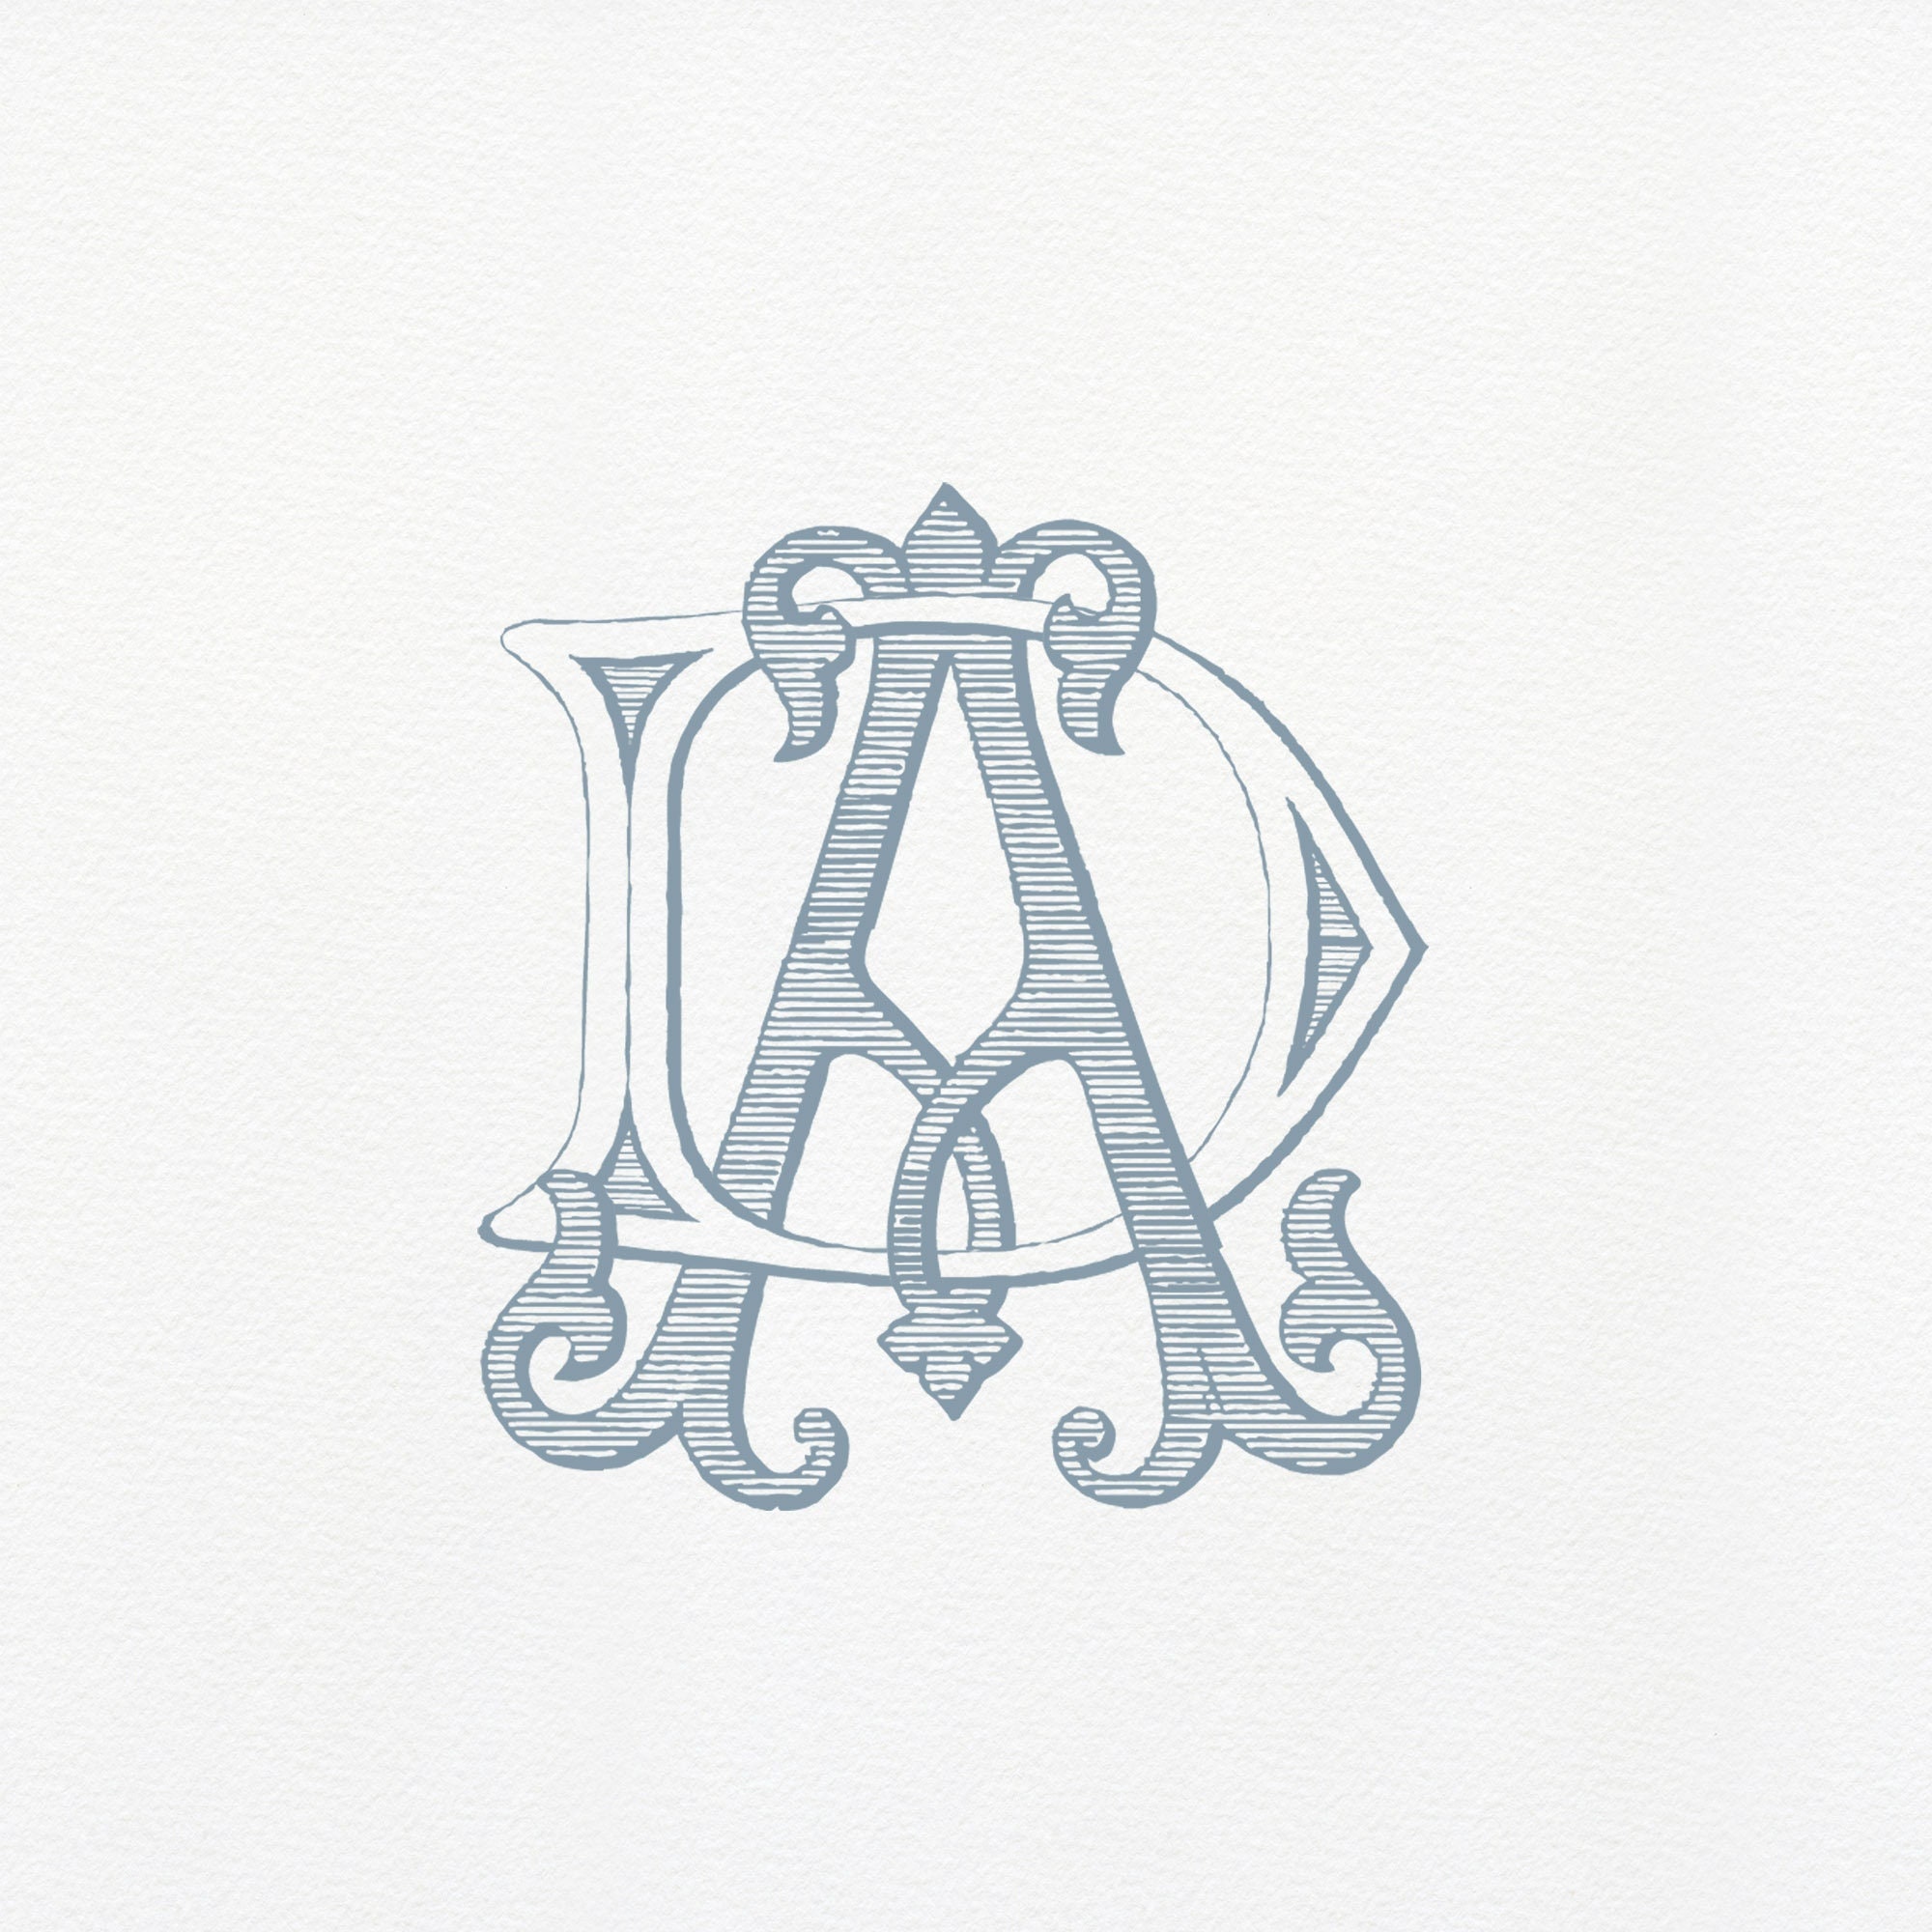 AD or DA Monogram, Crest or Logo - Digby & Rose